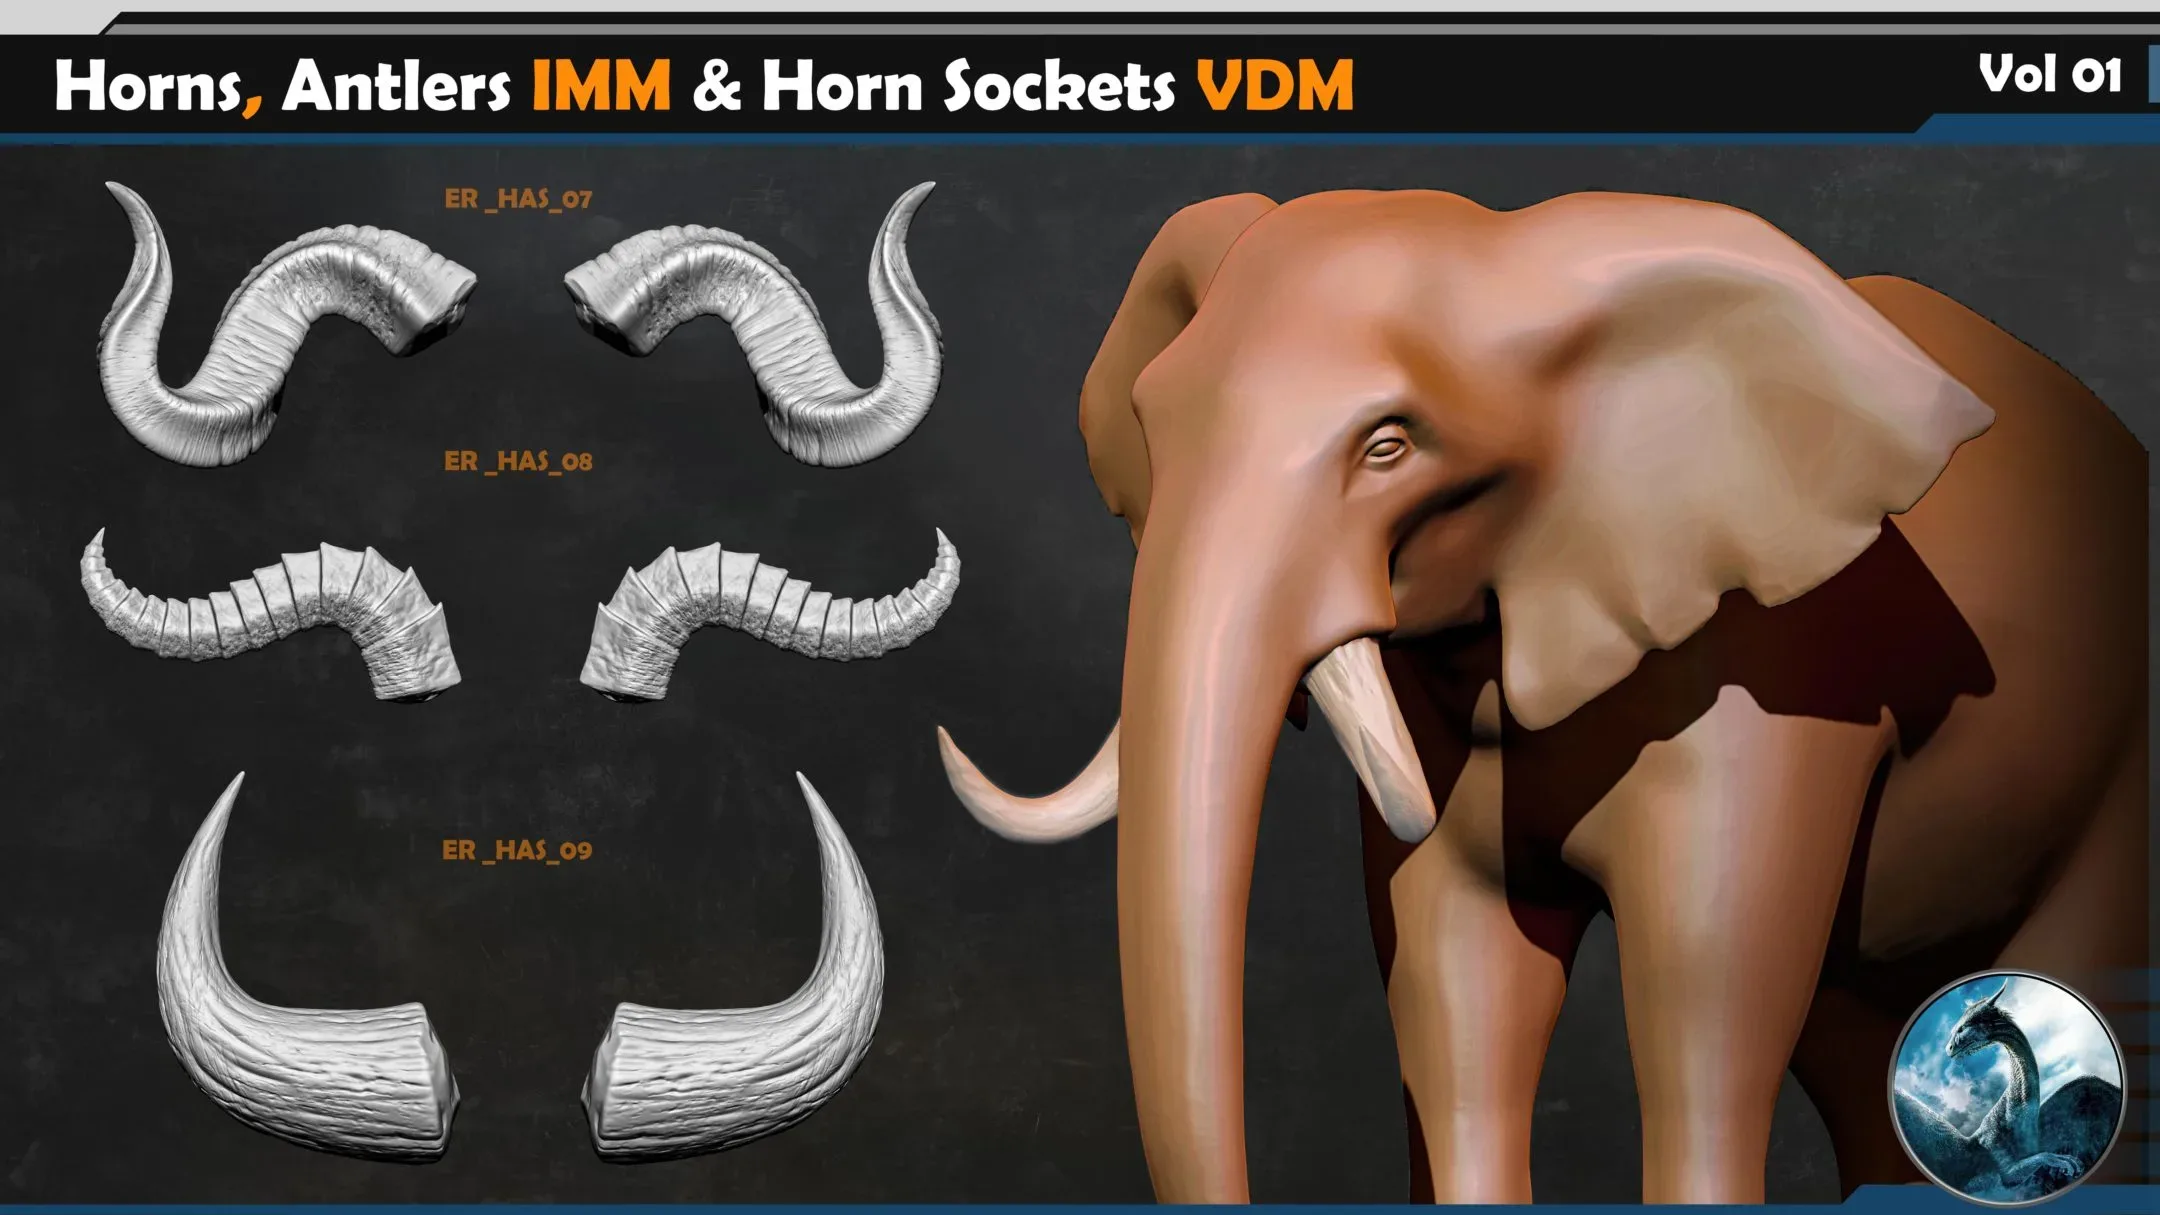 50 Horns, Antlers IMM & Horn Sockets VDM _Vol 01